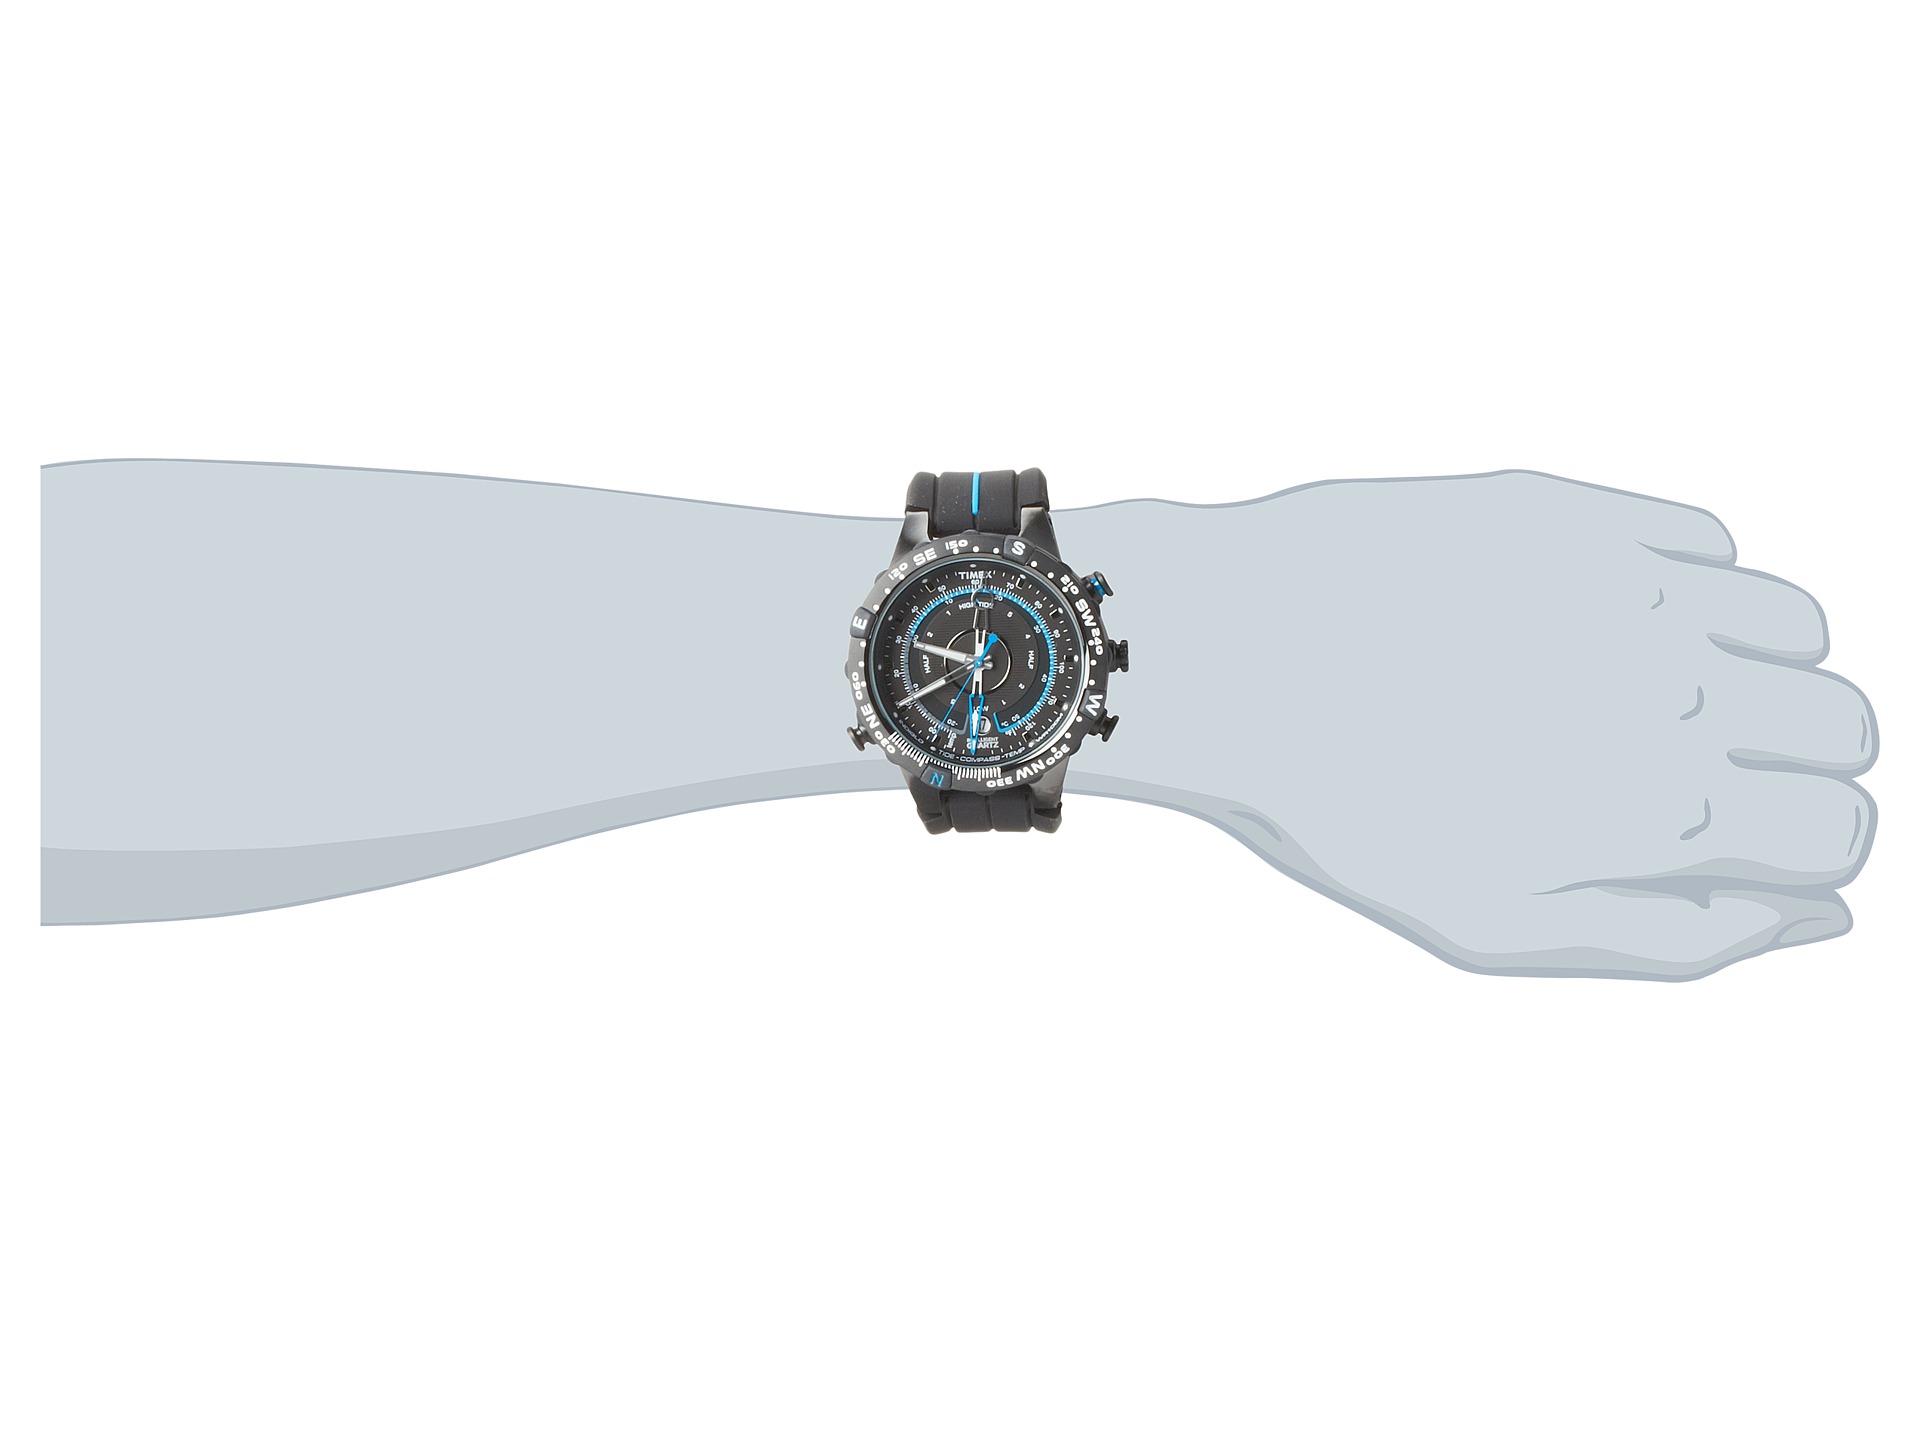 Timex Intelligent Quartz Adventure Series Tide Temp Compass Silicone Strap Watch Black